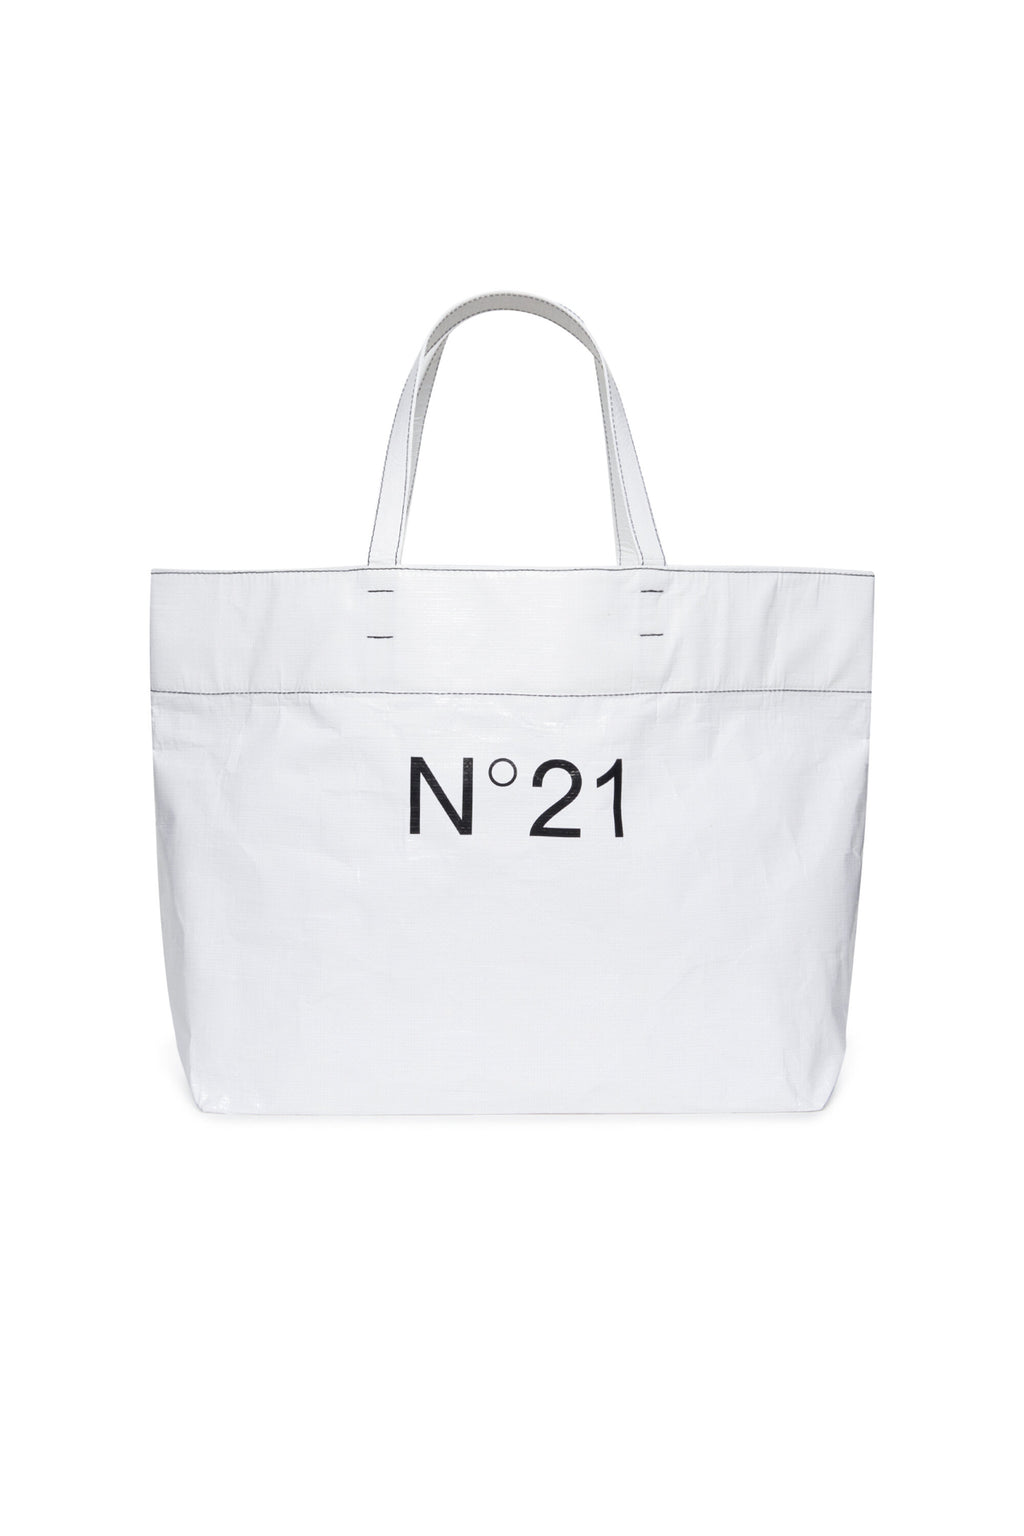 White shopper bag with institutional logo